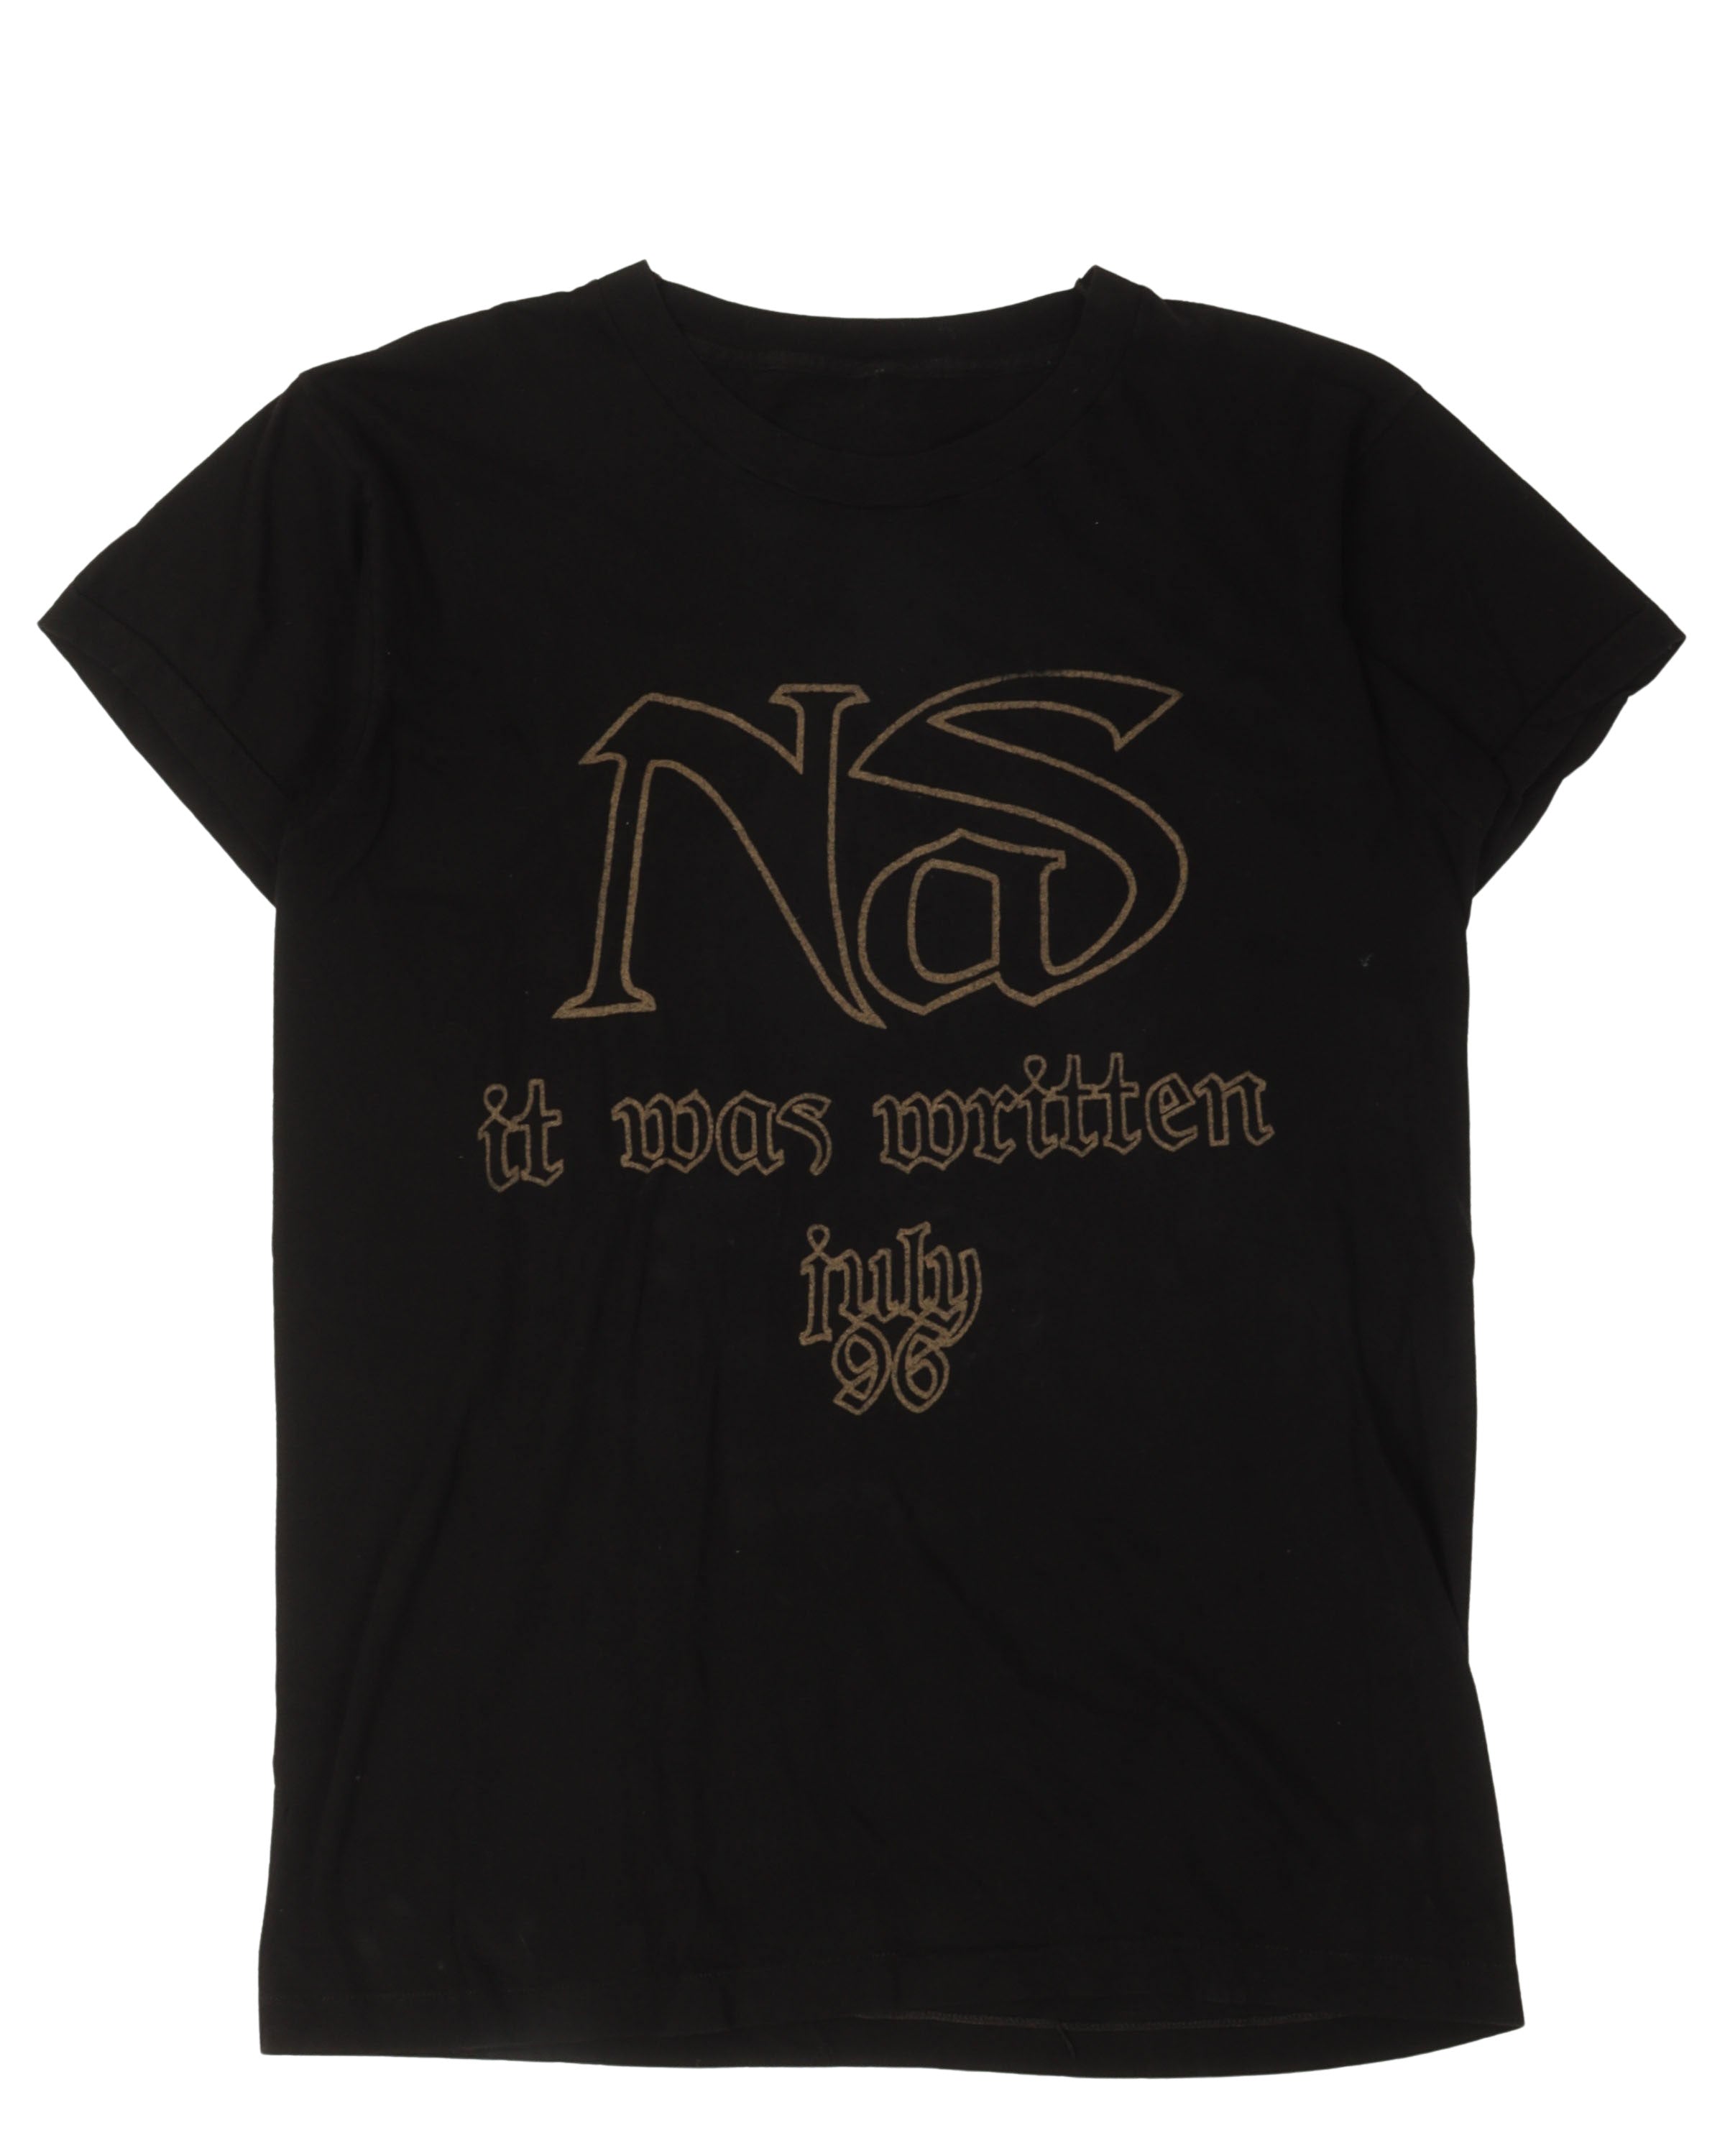 Nas "It Was Written" T-Shirt (1996)